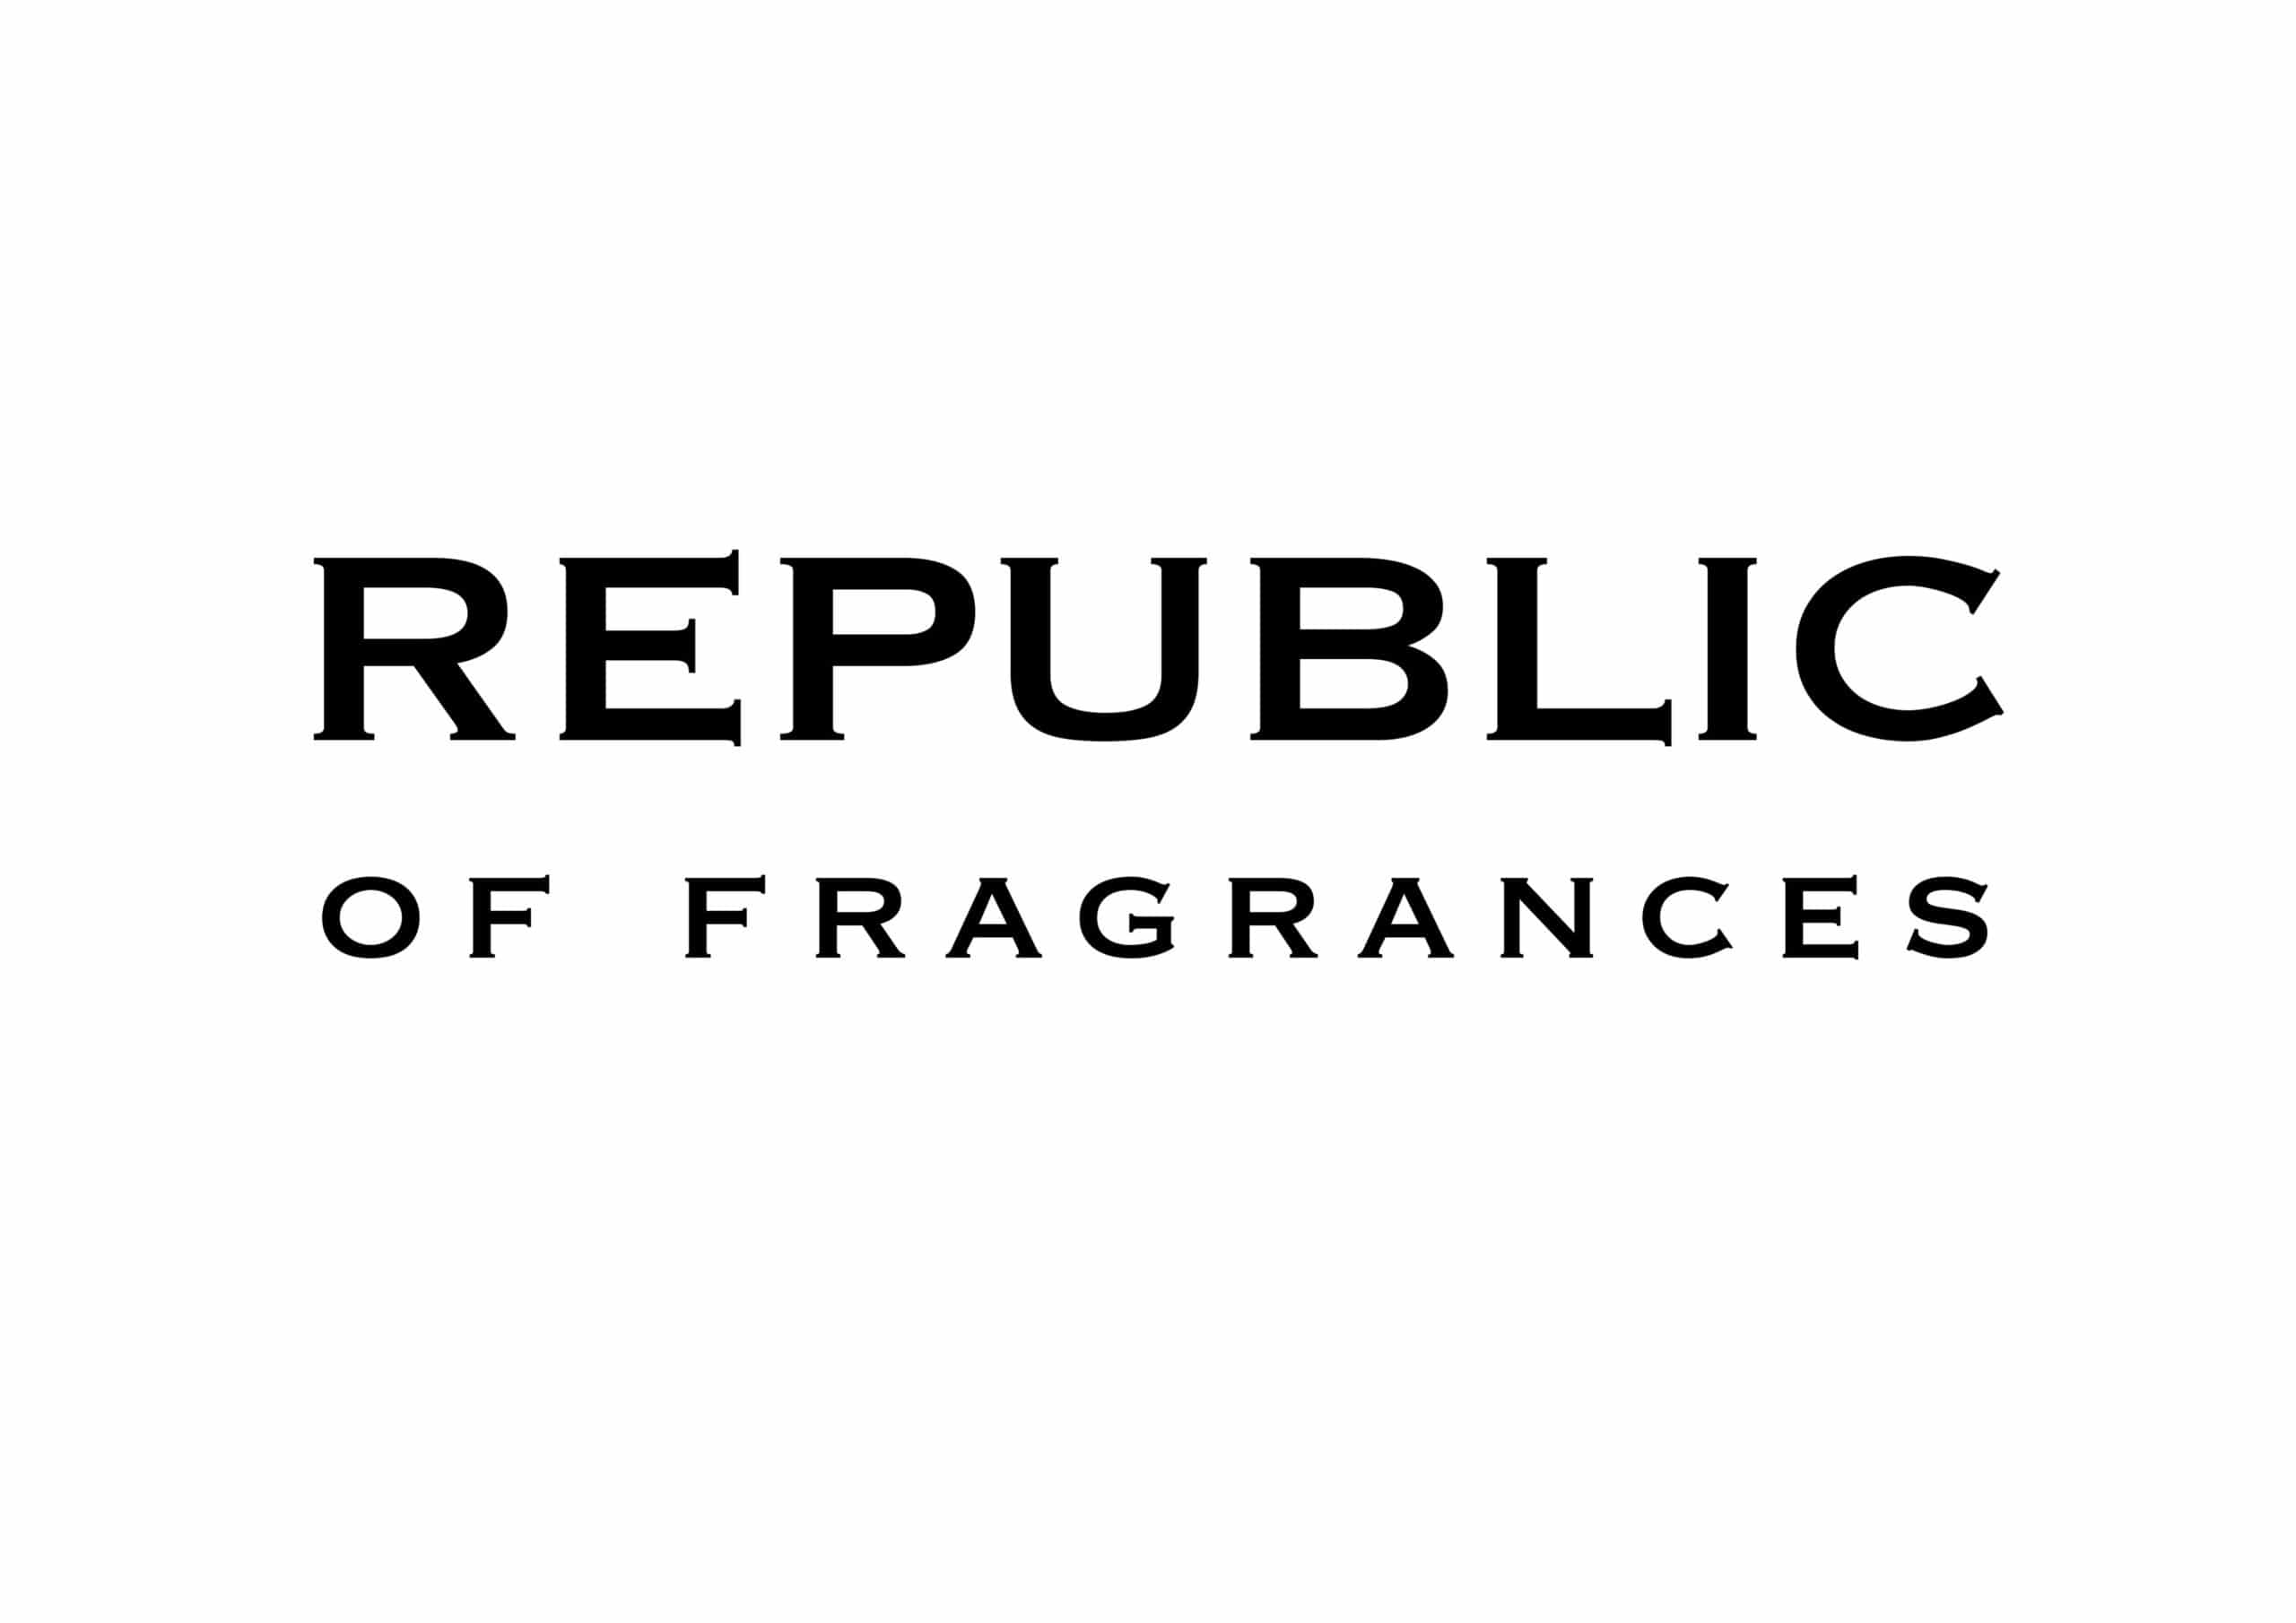 Logo-Republic of Fragrances- Geurkaarsen en roomsprays